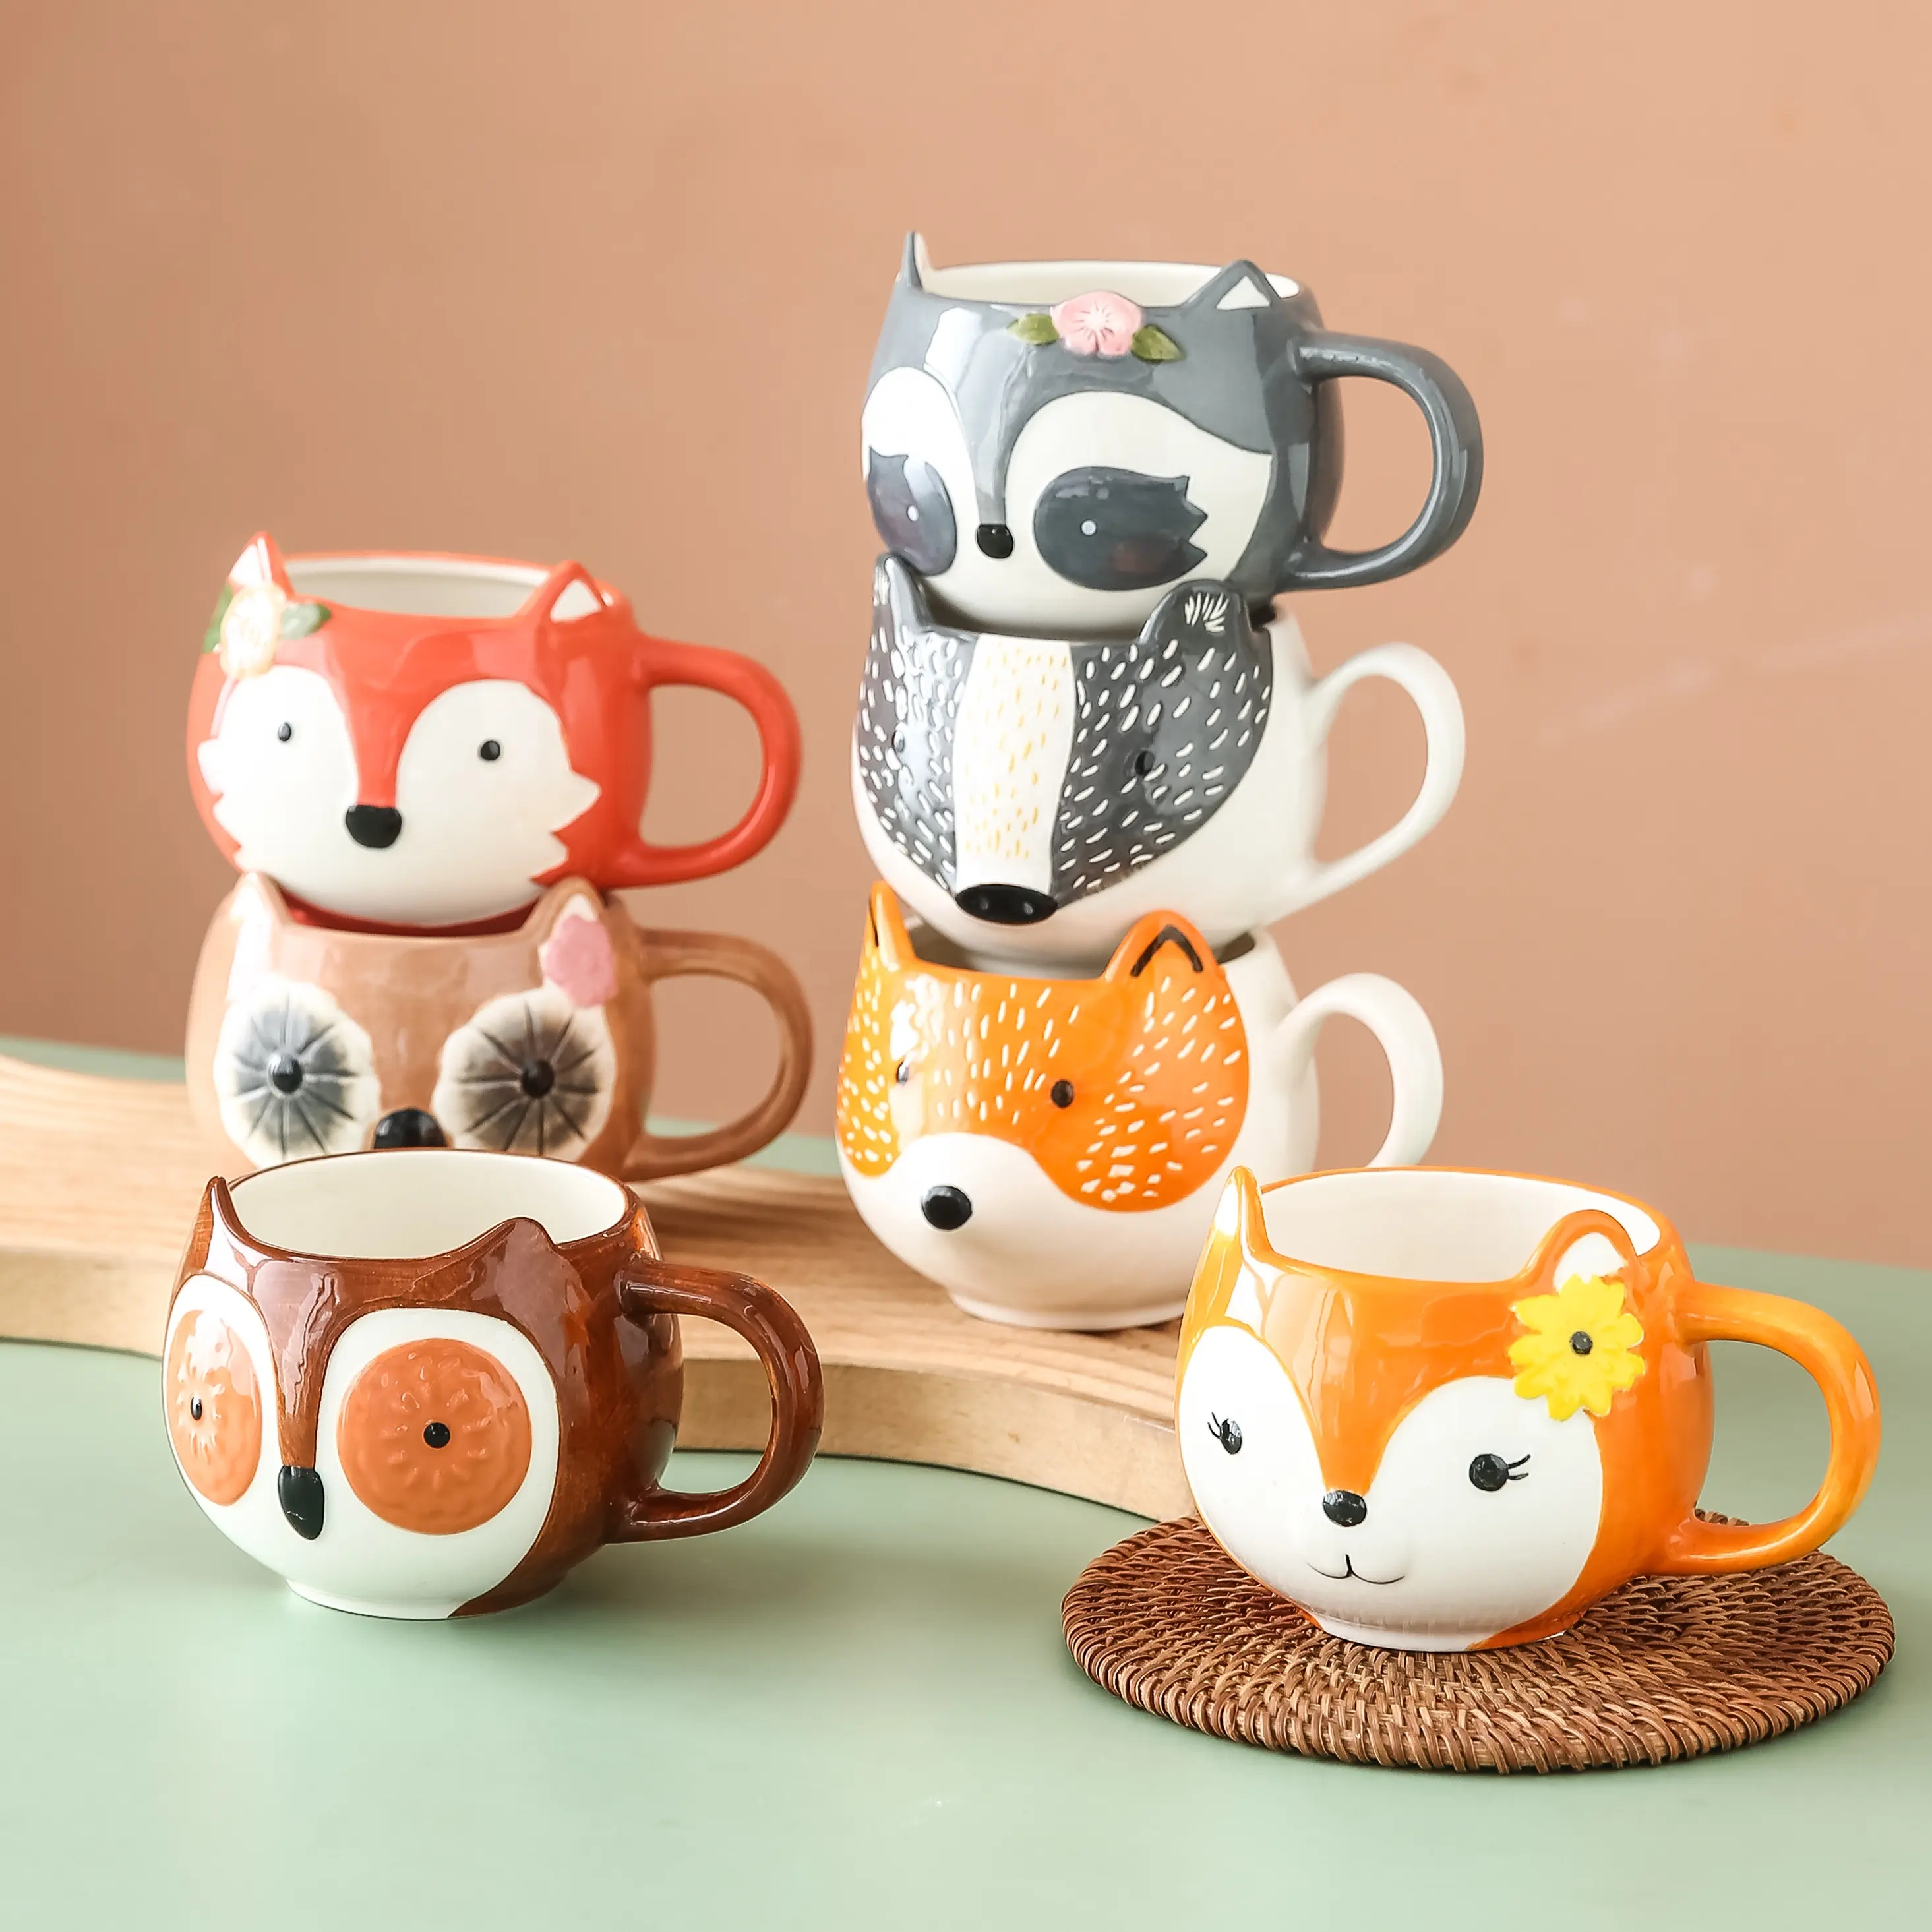 Europa novedad dibujos animados 3D Animal cara en forma de personalizado pintado a mano taza cerámica té café Animal tazas con asa